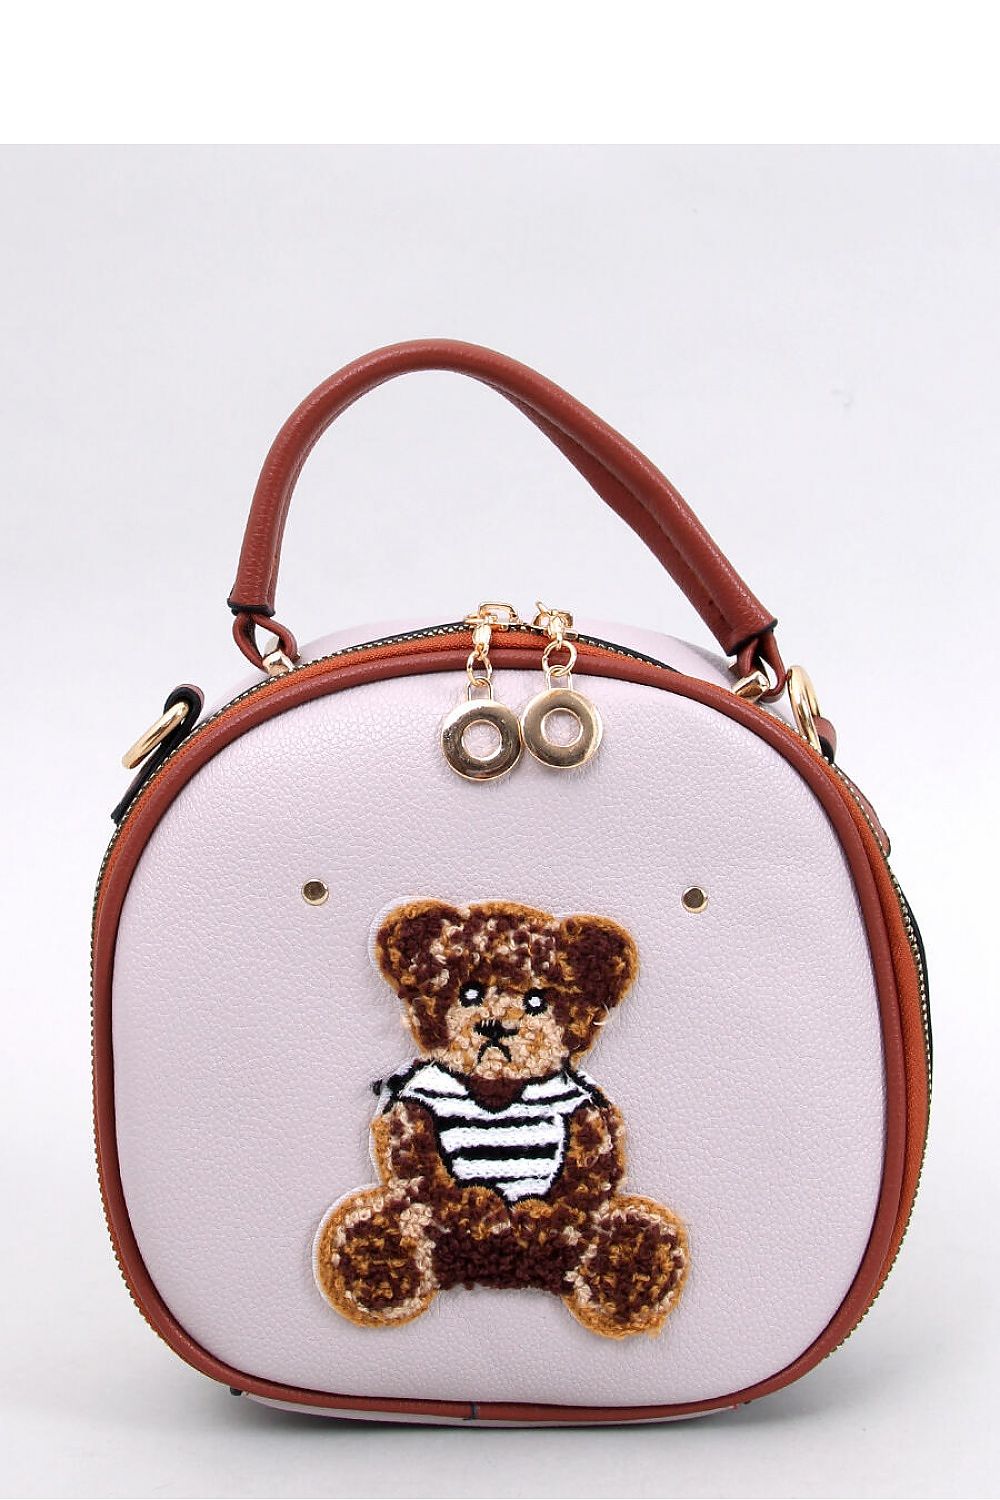 Teddy Bear Trunk Bag - Chic Ecological Leather Handbag